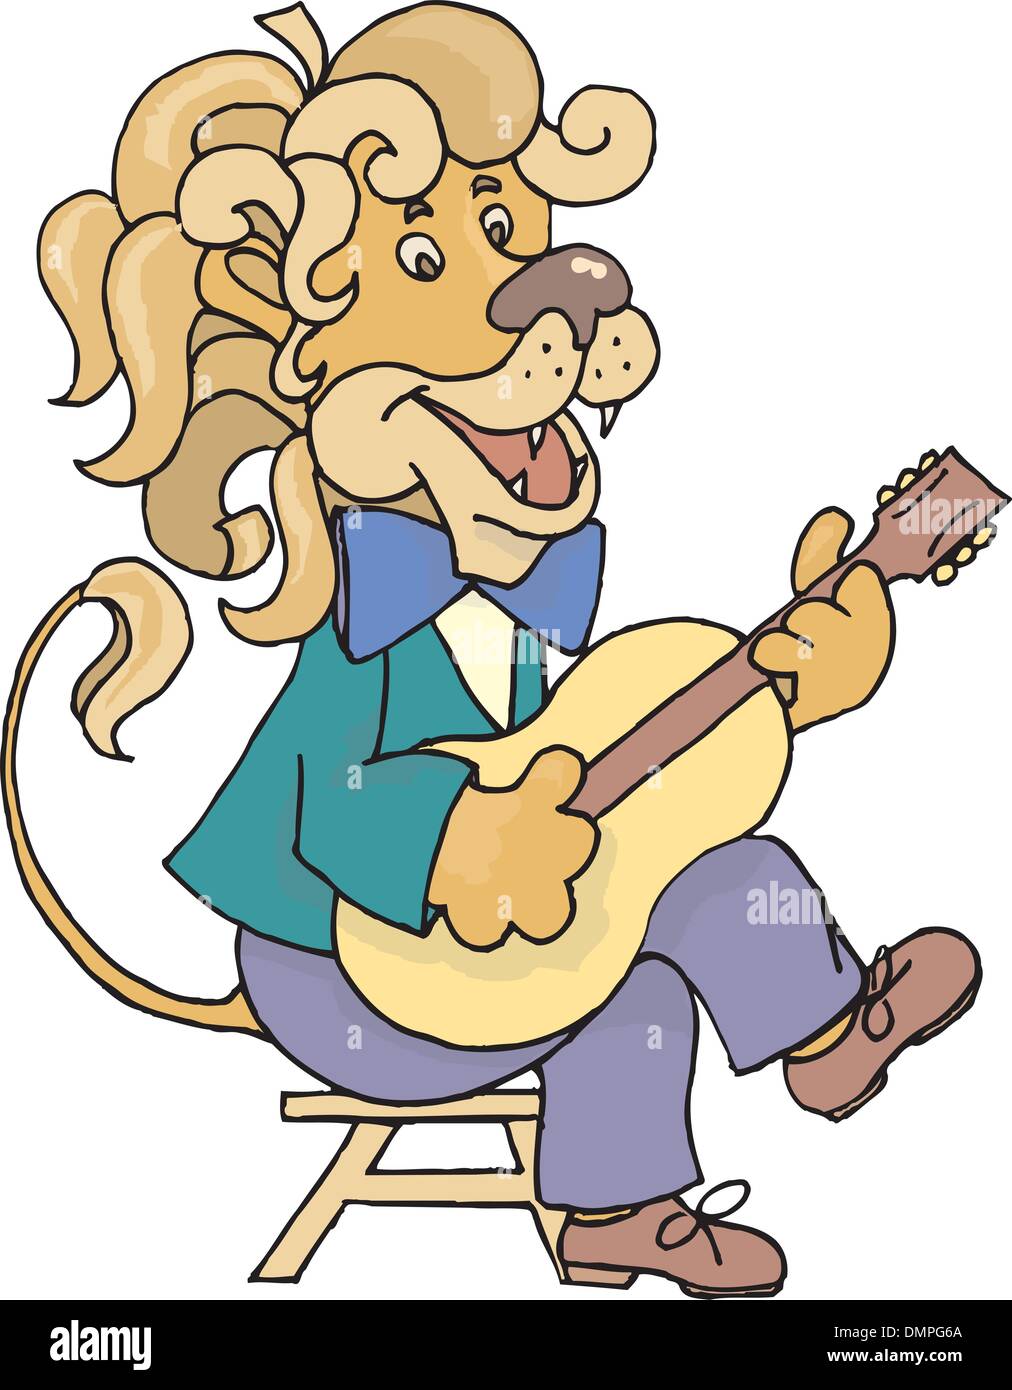 Tocar una guitarra de león Imagen Vector de stock - Alamy